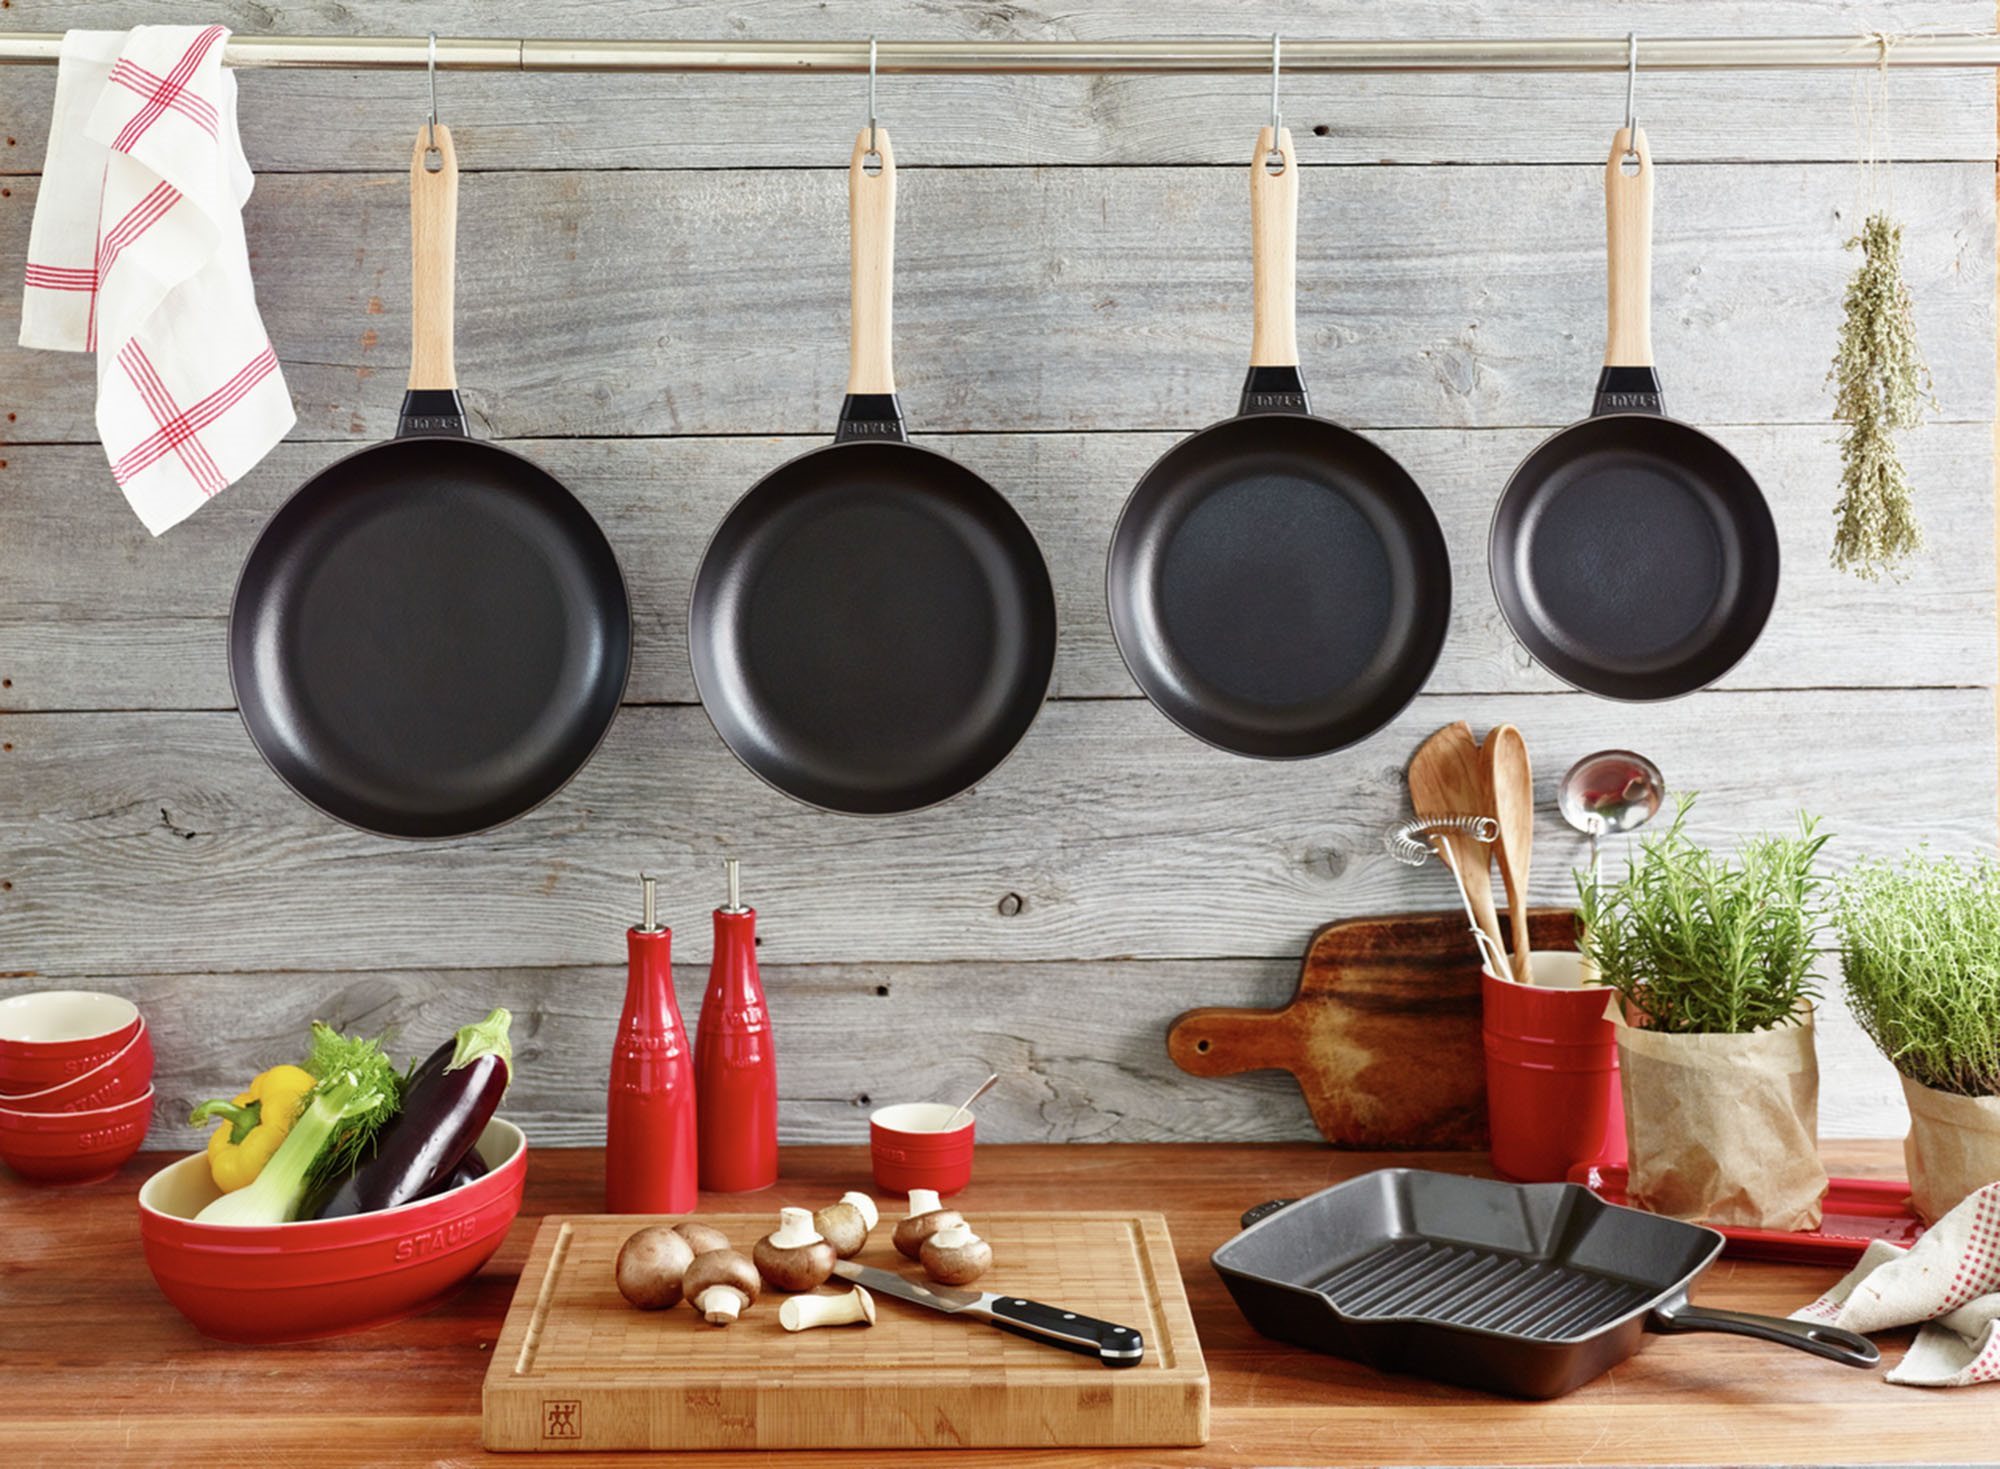  STAUB Cast Iron Frying Pan, Grey, 34 cm: Home & Kitchen